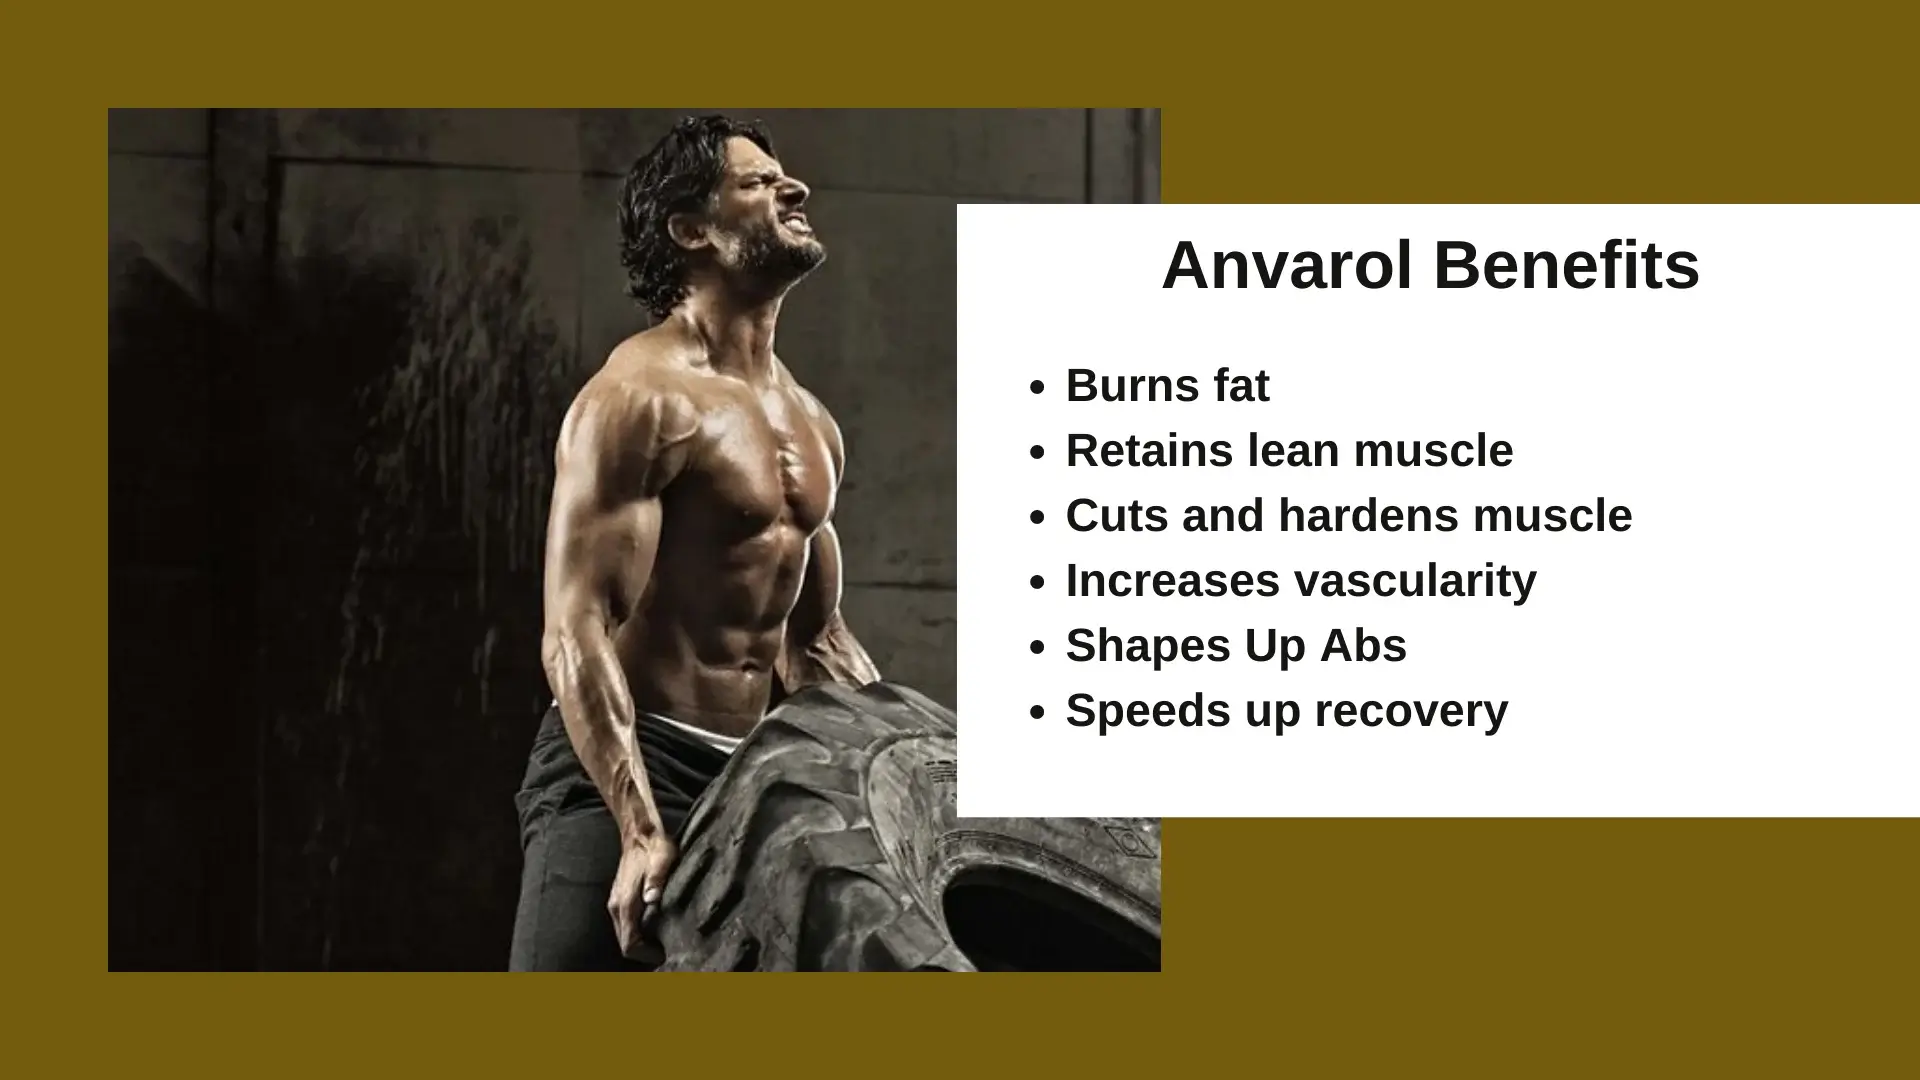 Anvarol benefits